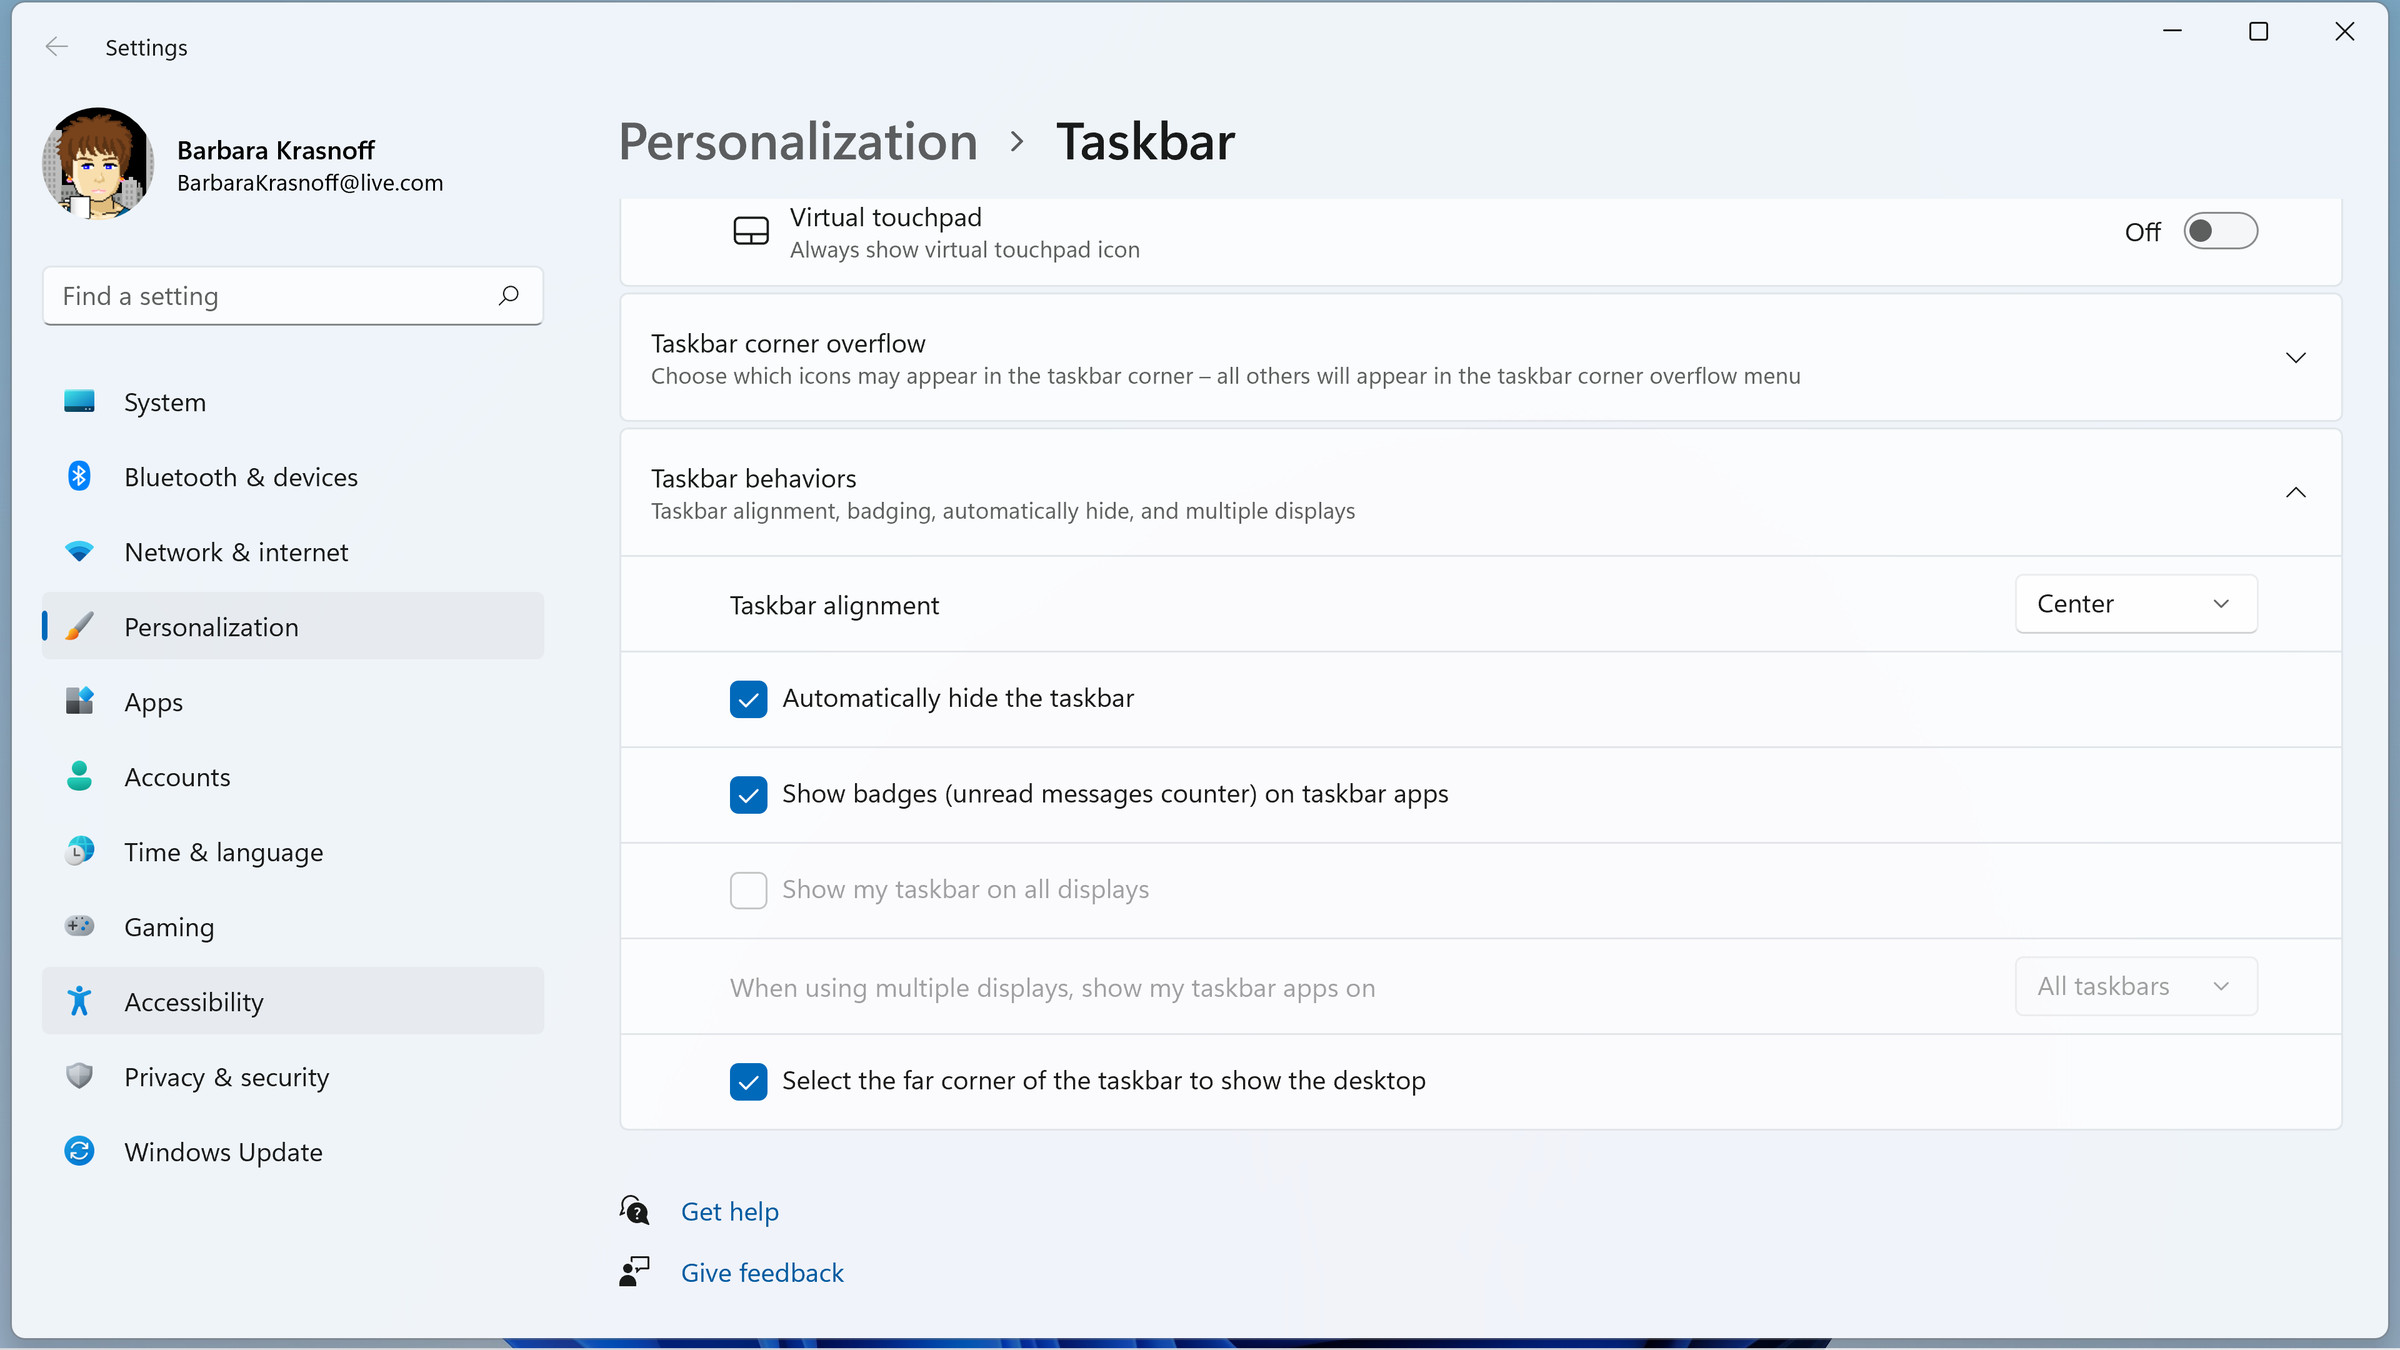 Taskbar behaviors include hiding the taskbar and showing unread messages.